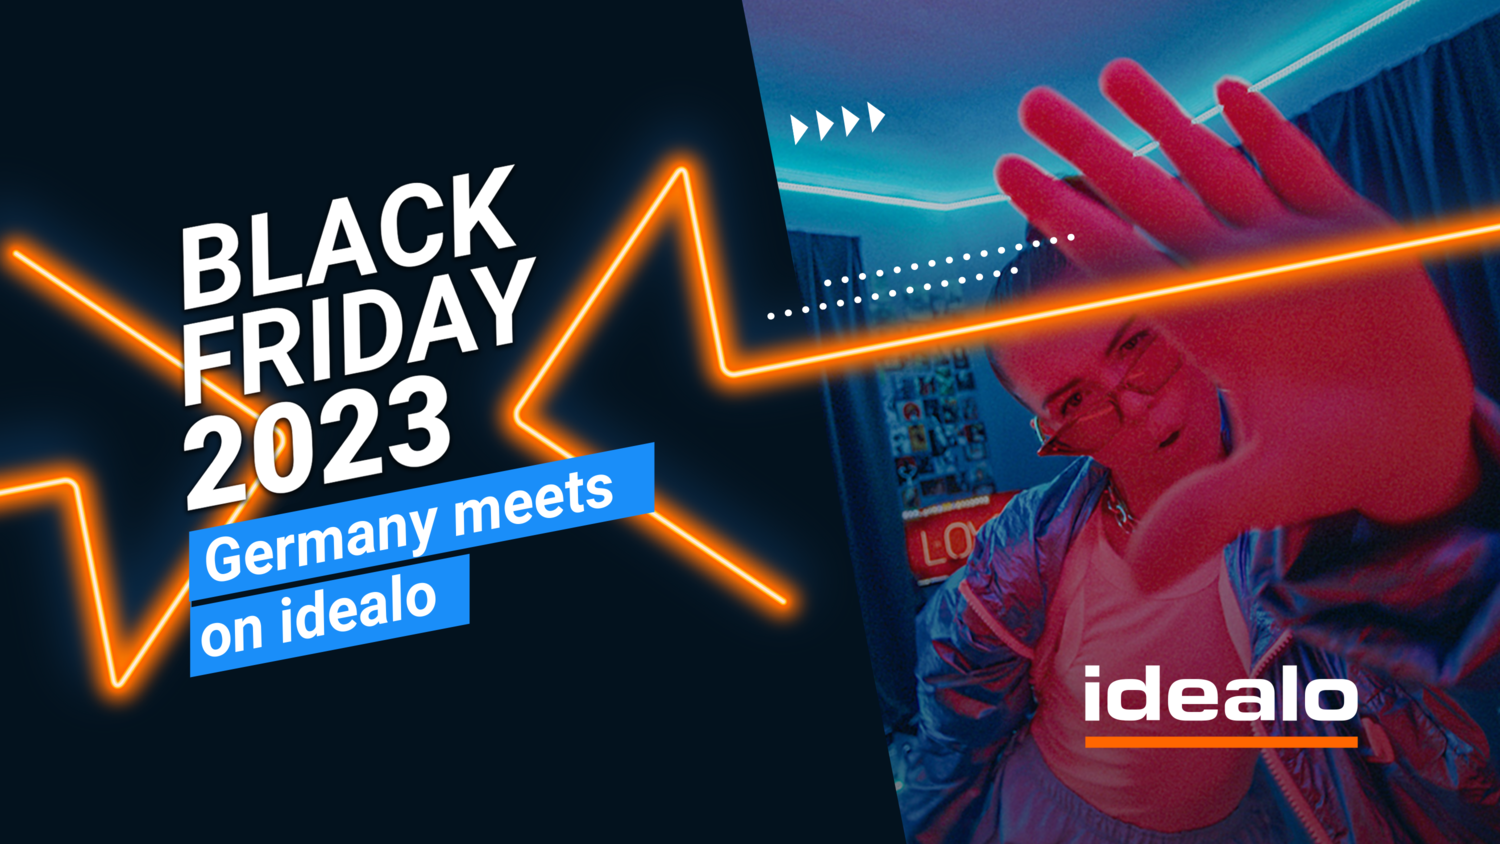 Black Friday 2023: Germany meets on idealo